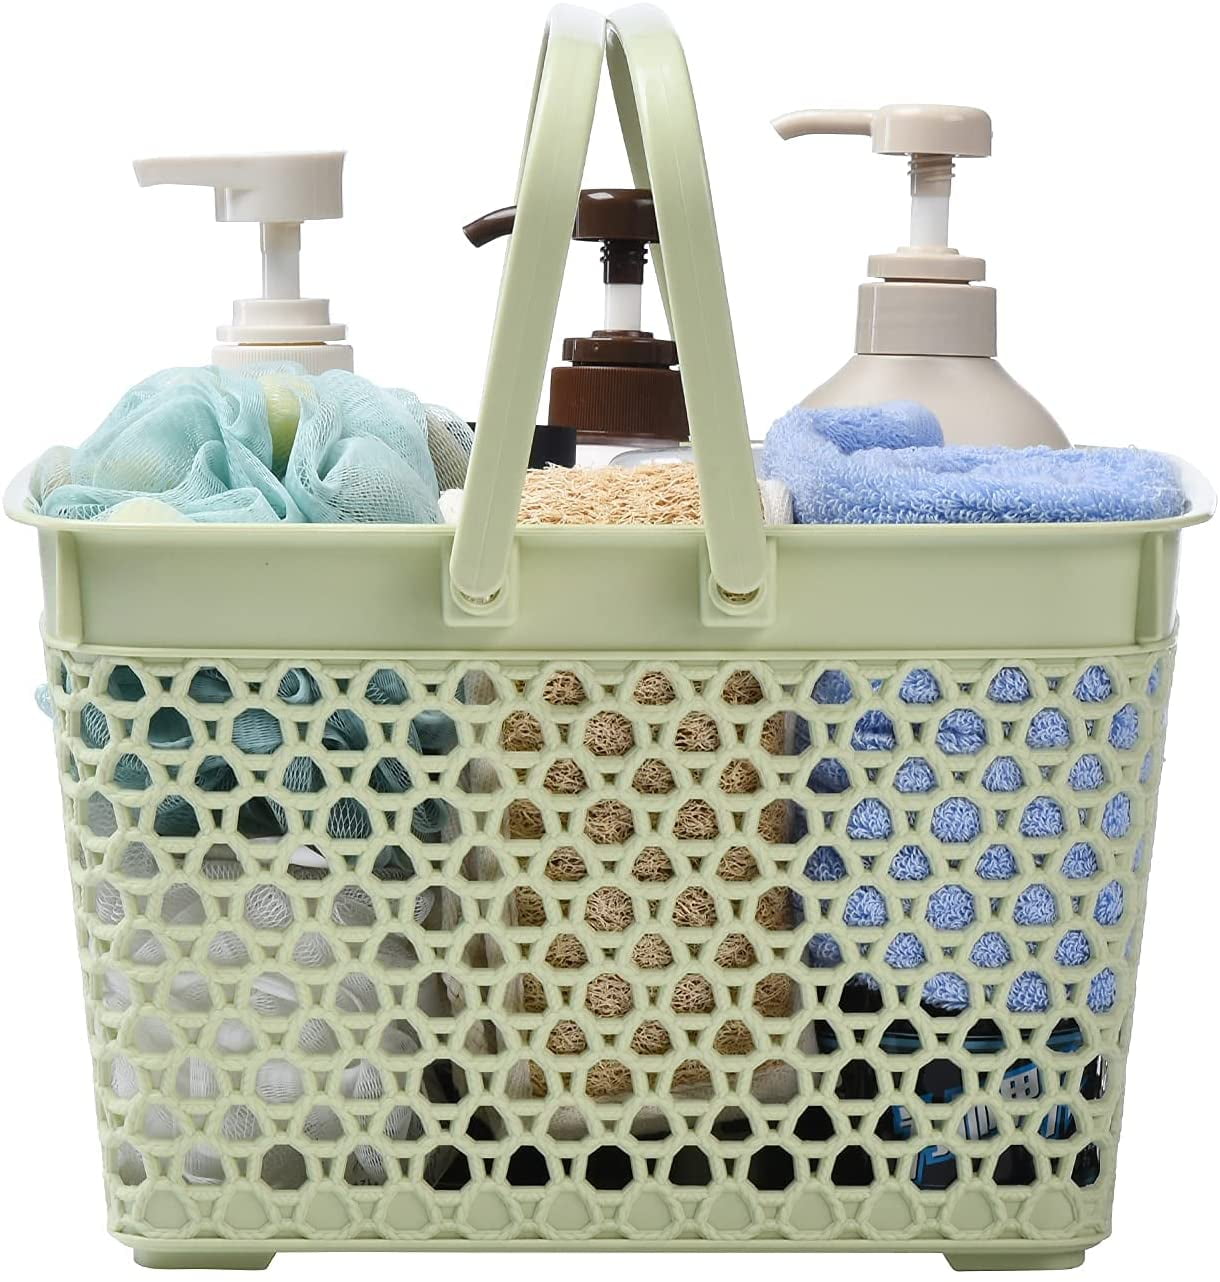 UUJOLY Plastic Organizer Storage Baskets with Handles, Shower Caddy Bins  Organizer for Bathroom and kitchen（Grey